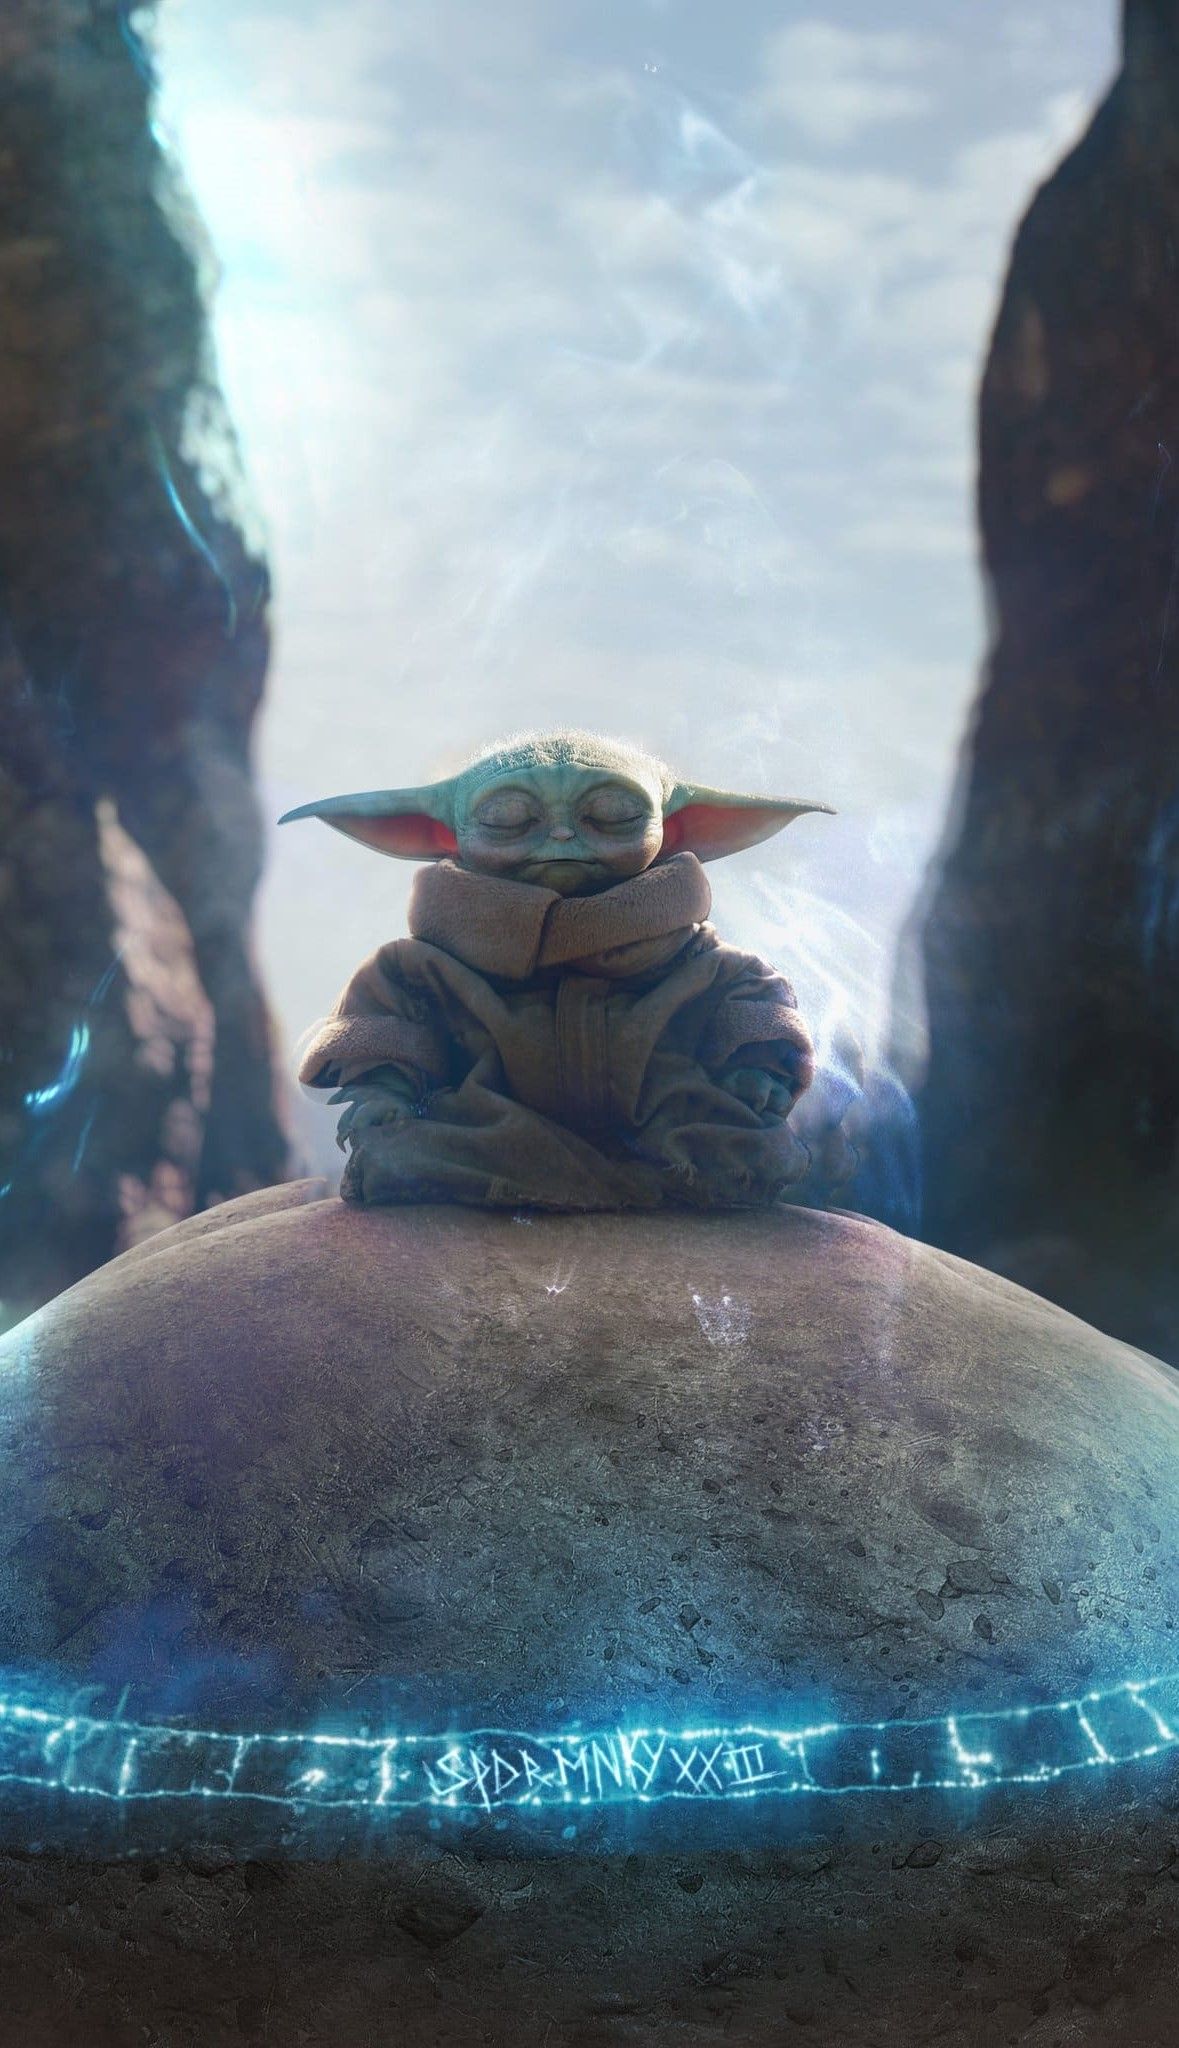 The baby yoda is sitting on a rock - Baby Yoda